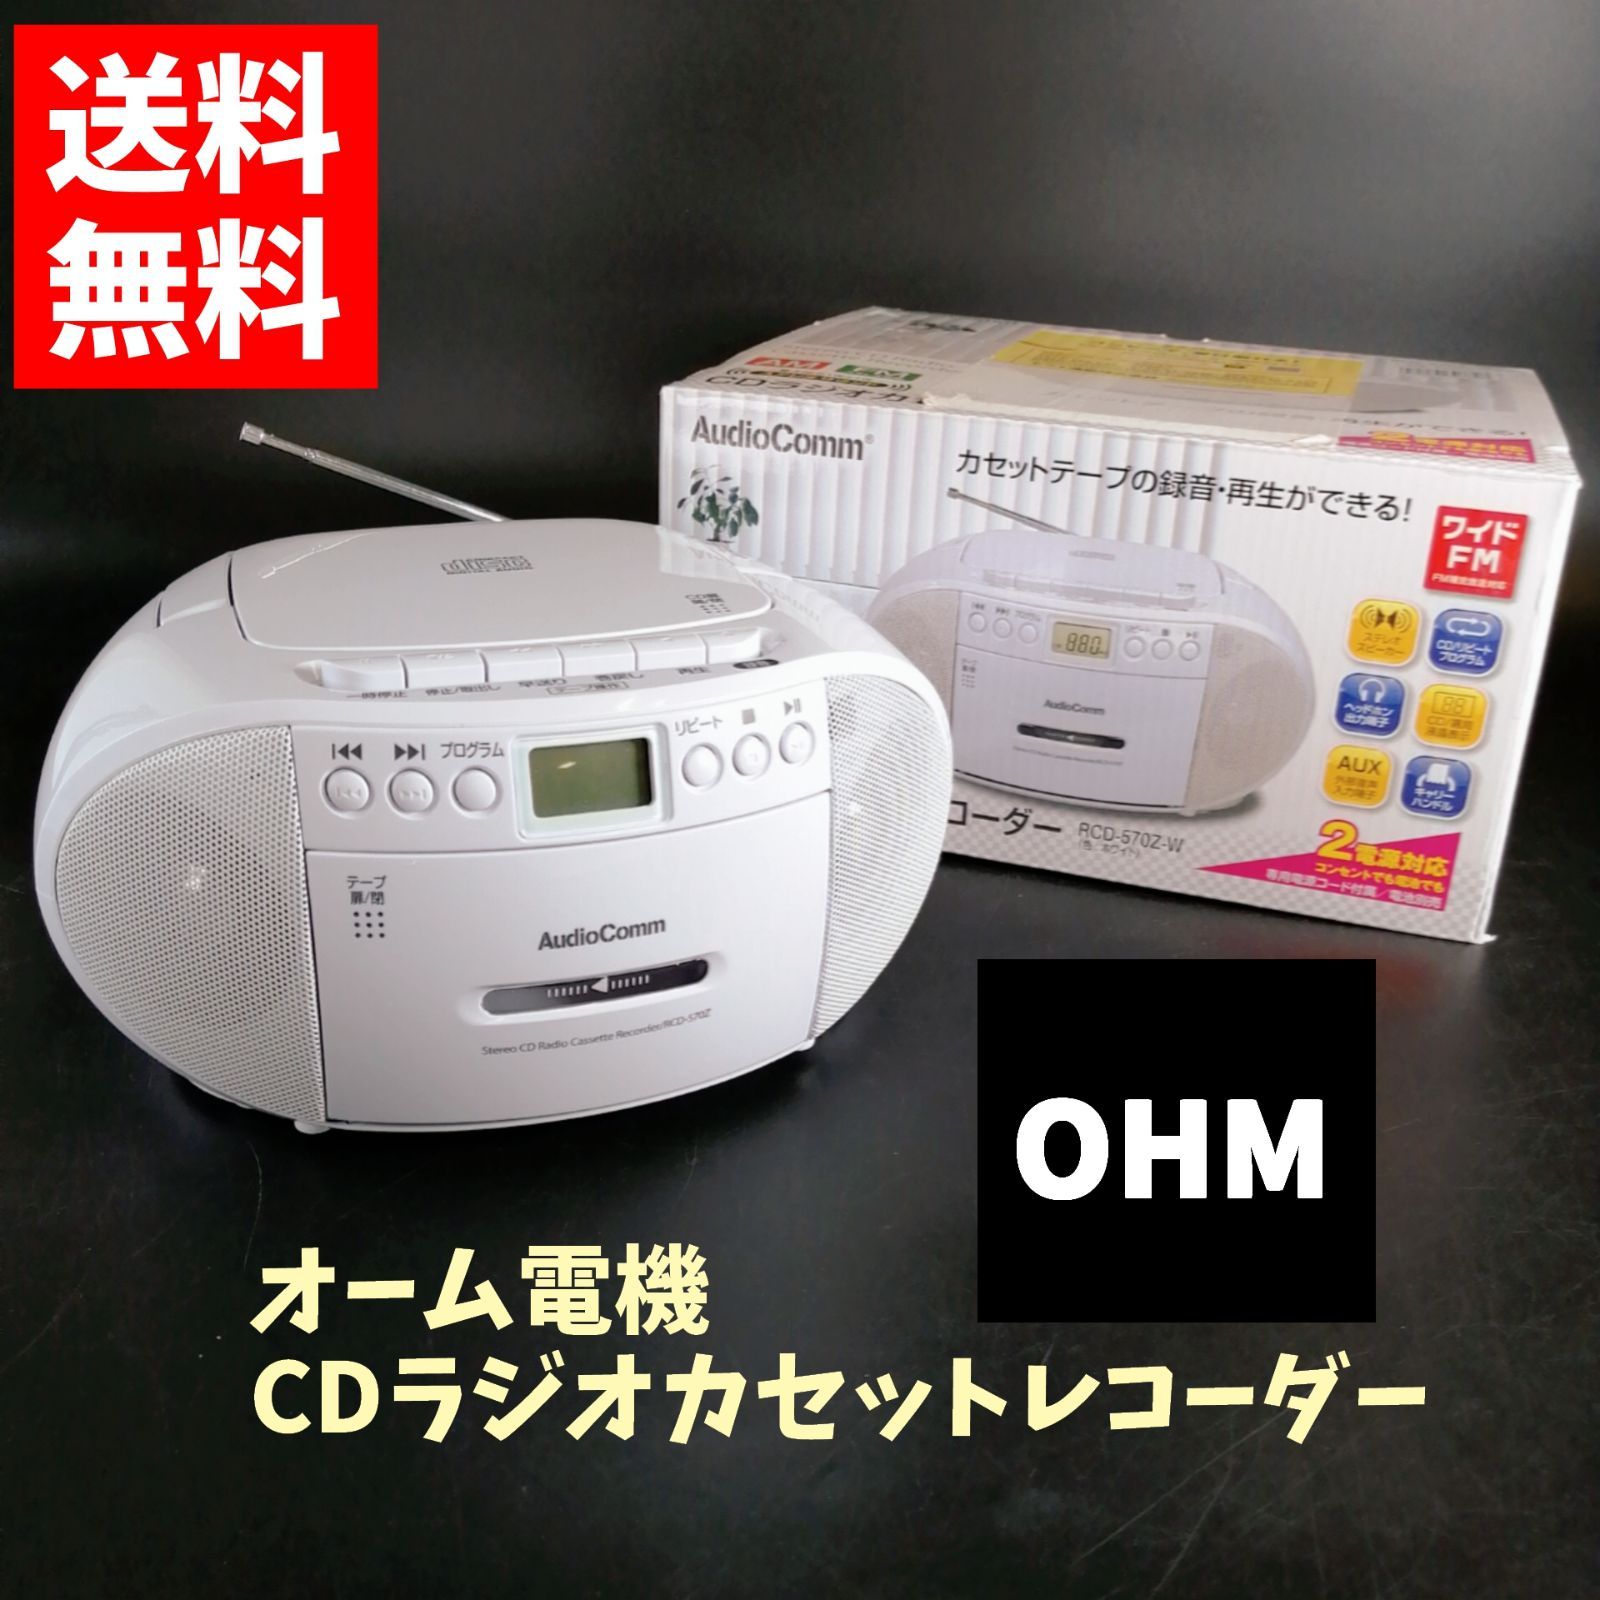 Audio Comm CD ラジオ カセットレコーダー